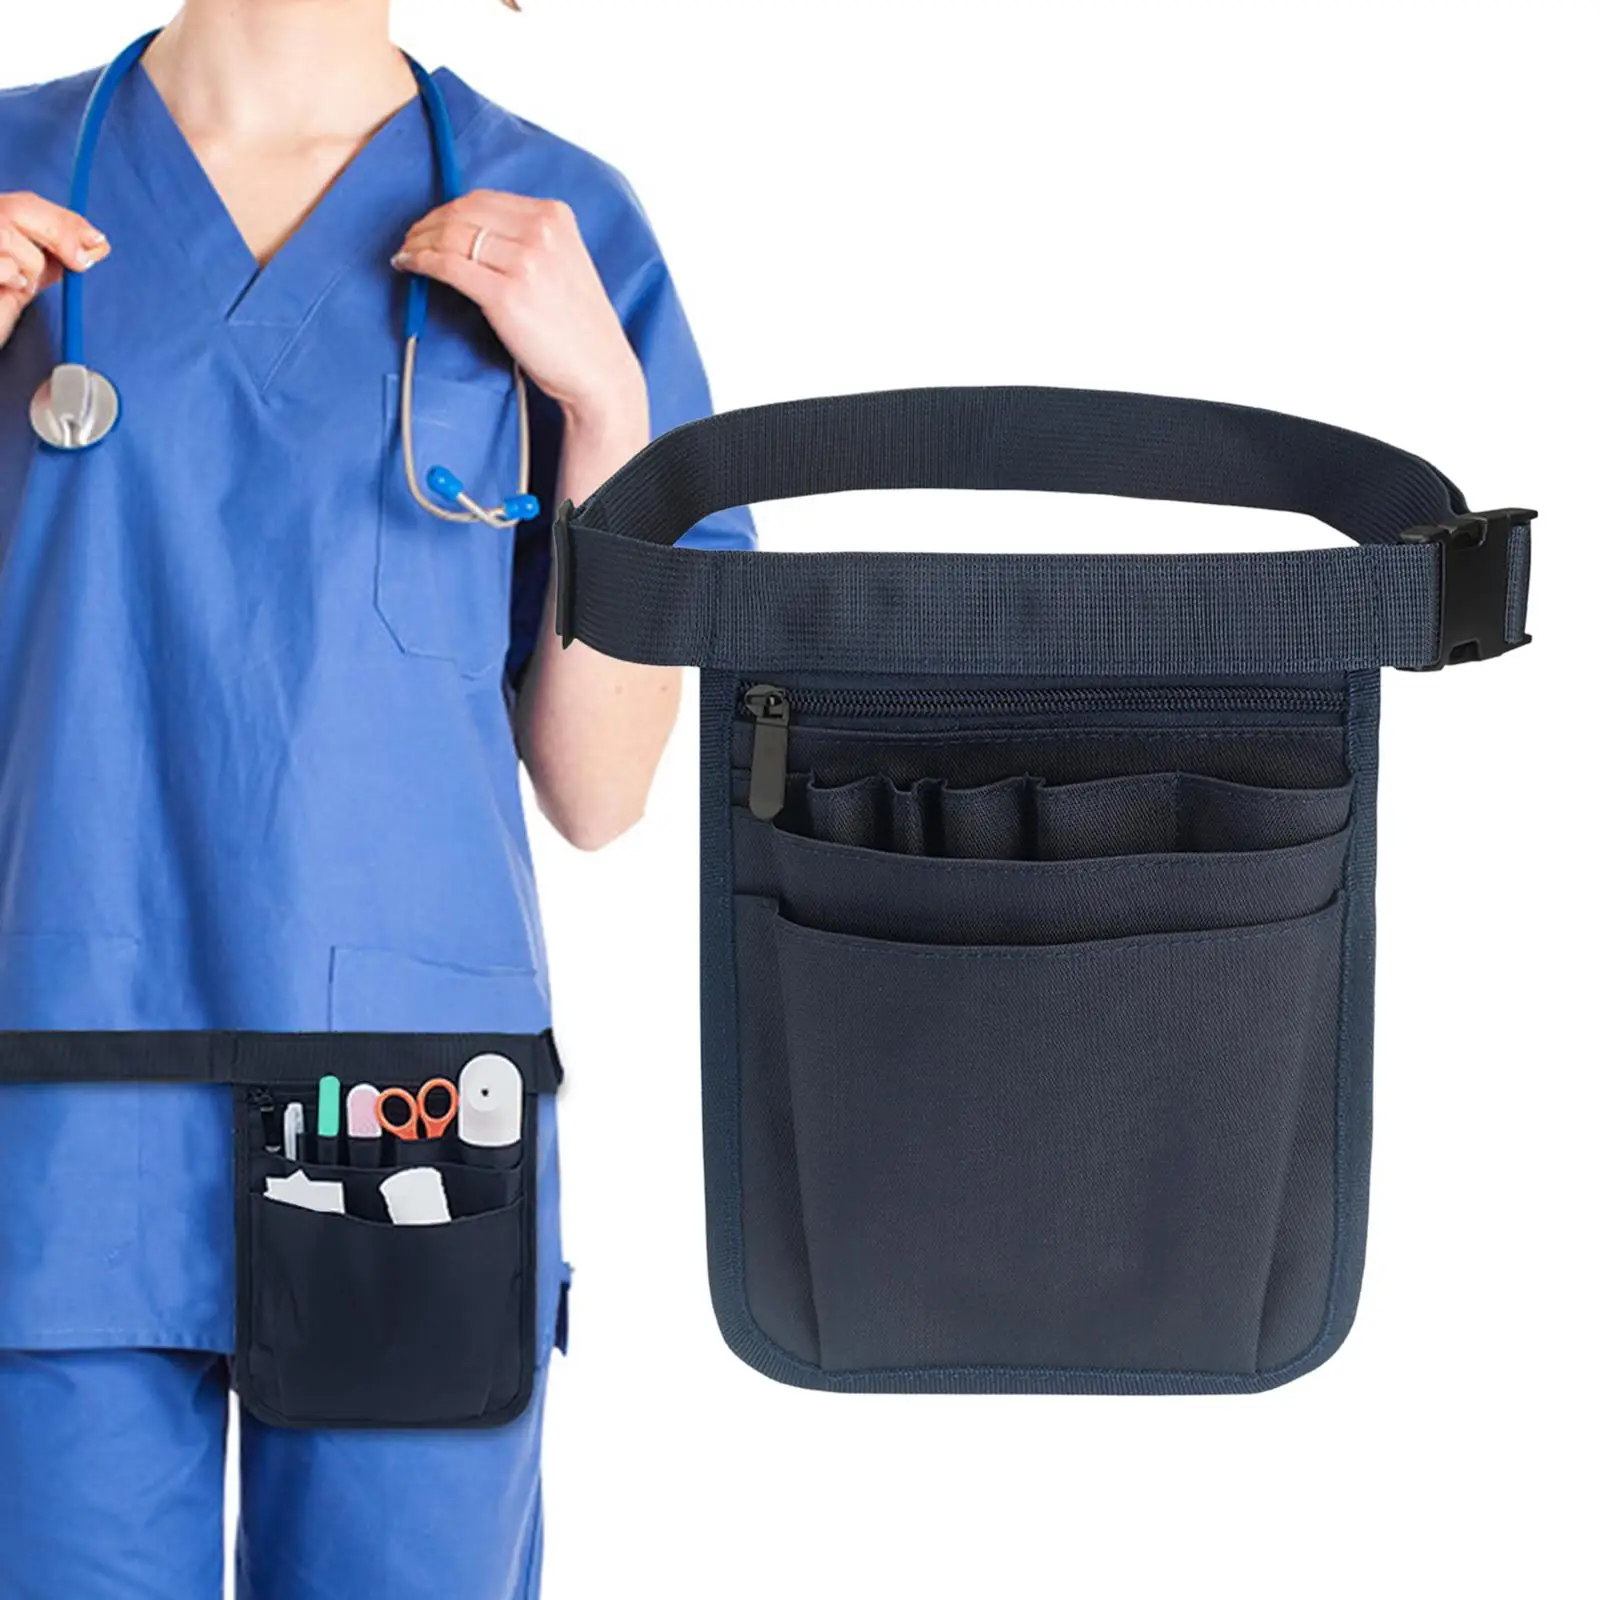 Multifunctional Nurse Fanny Pack Organizer Pocket Utility Waist Pack Nylon Blue Adjustable Accessories for Nursing Men Women